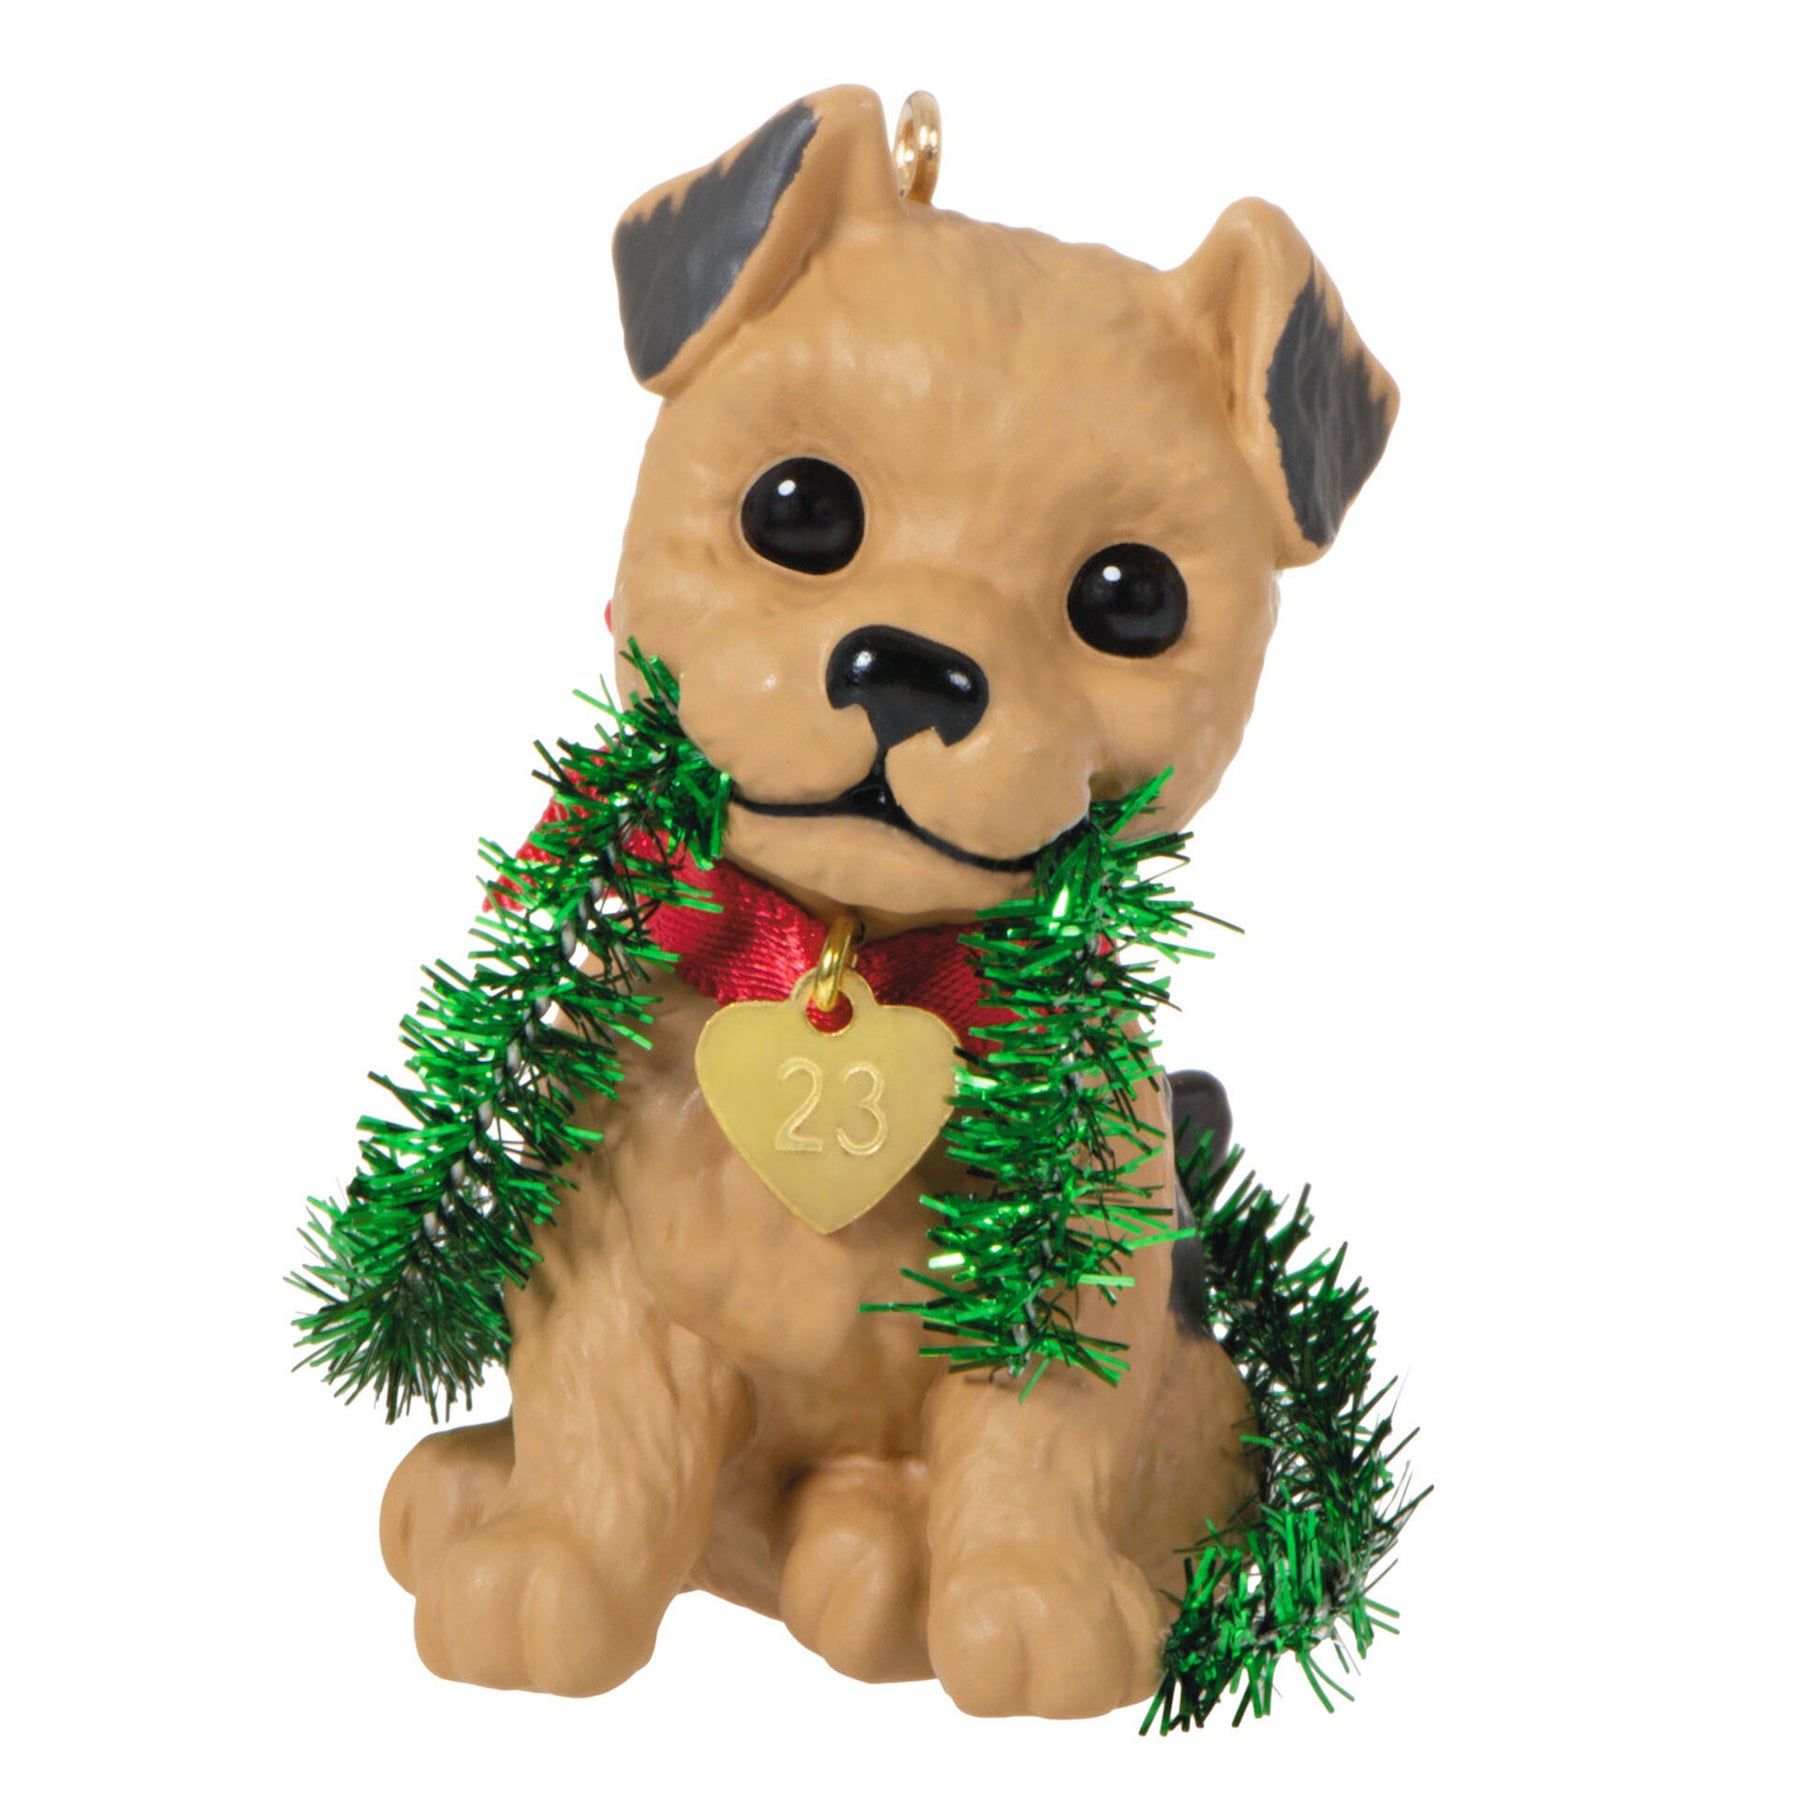 Dachshund dog pet memorial keychain - pet keepsake - pet loss key chain - dog  bag charm - rainbow bridge gift - dog jewellery - jewelry